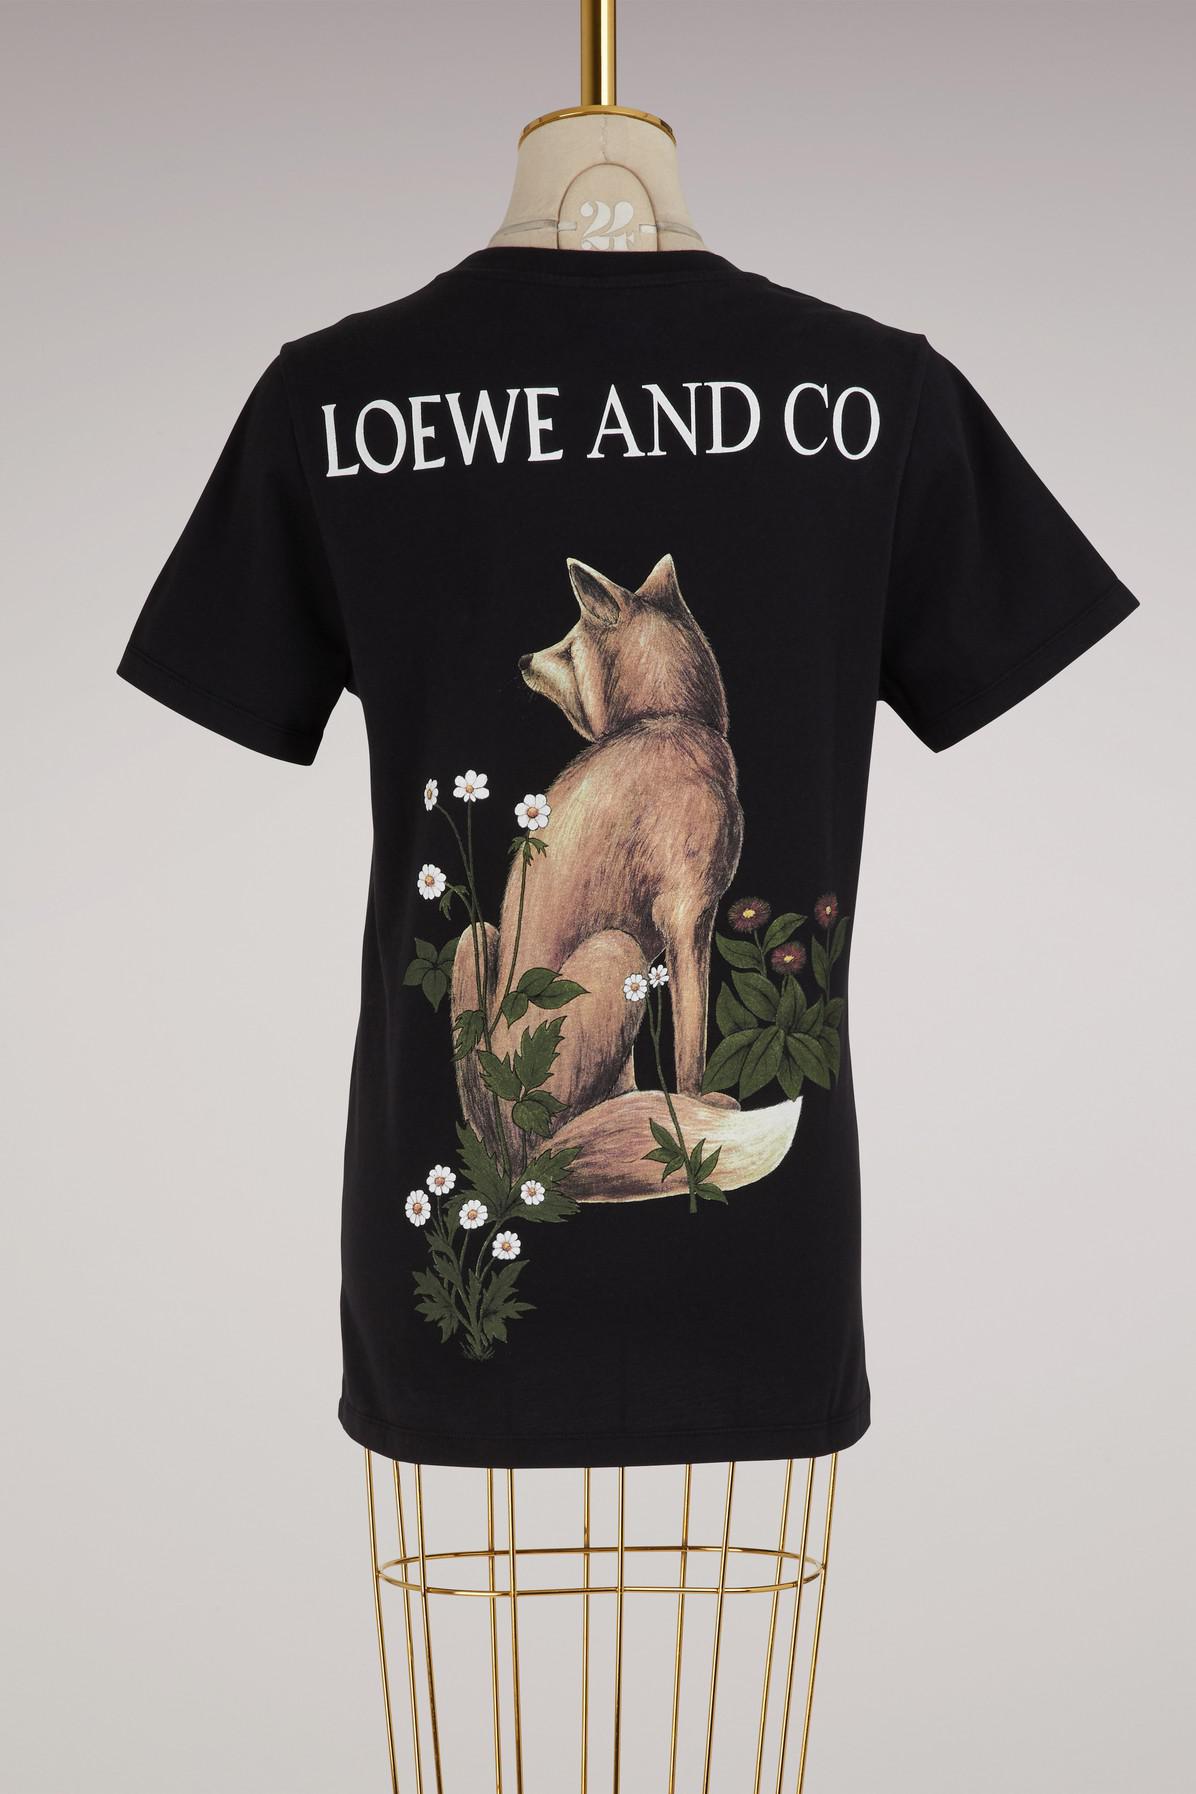 loewe and co t shirt